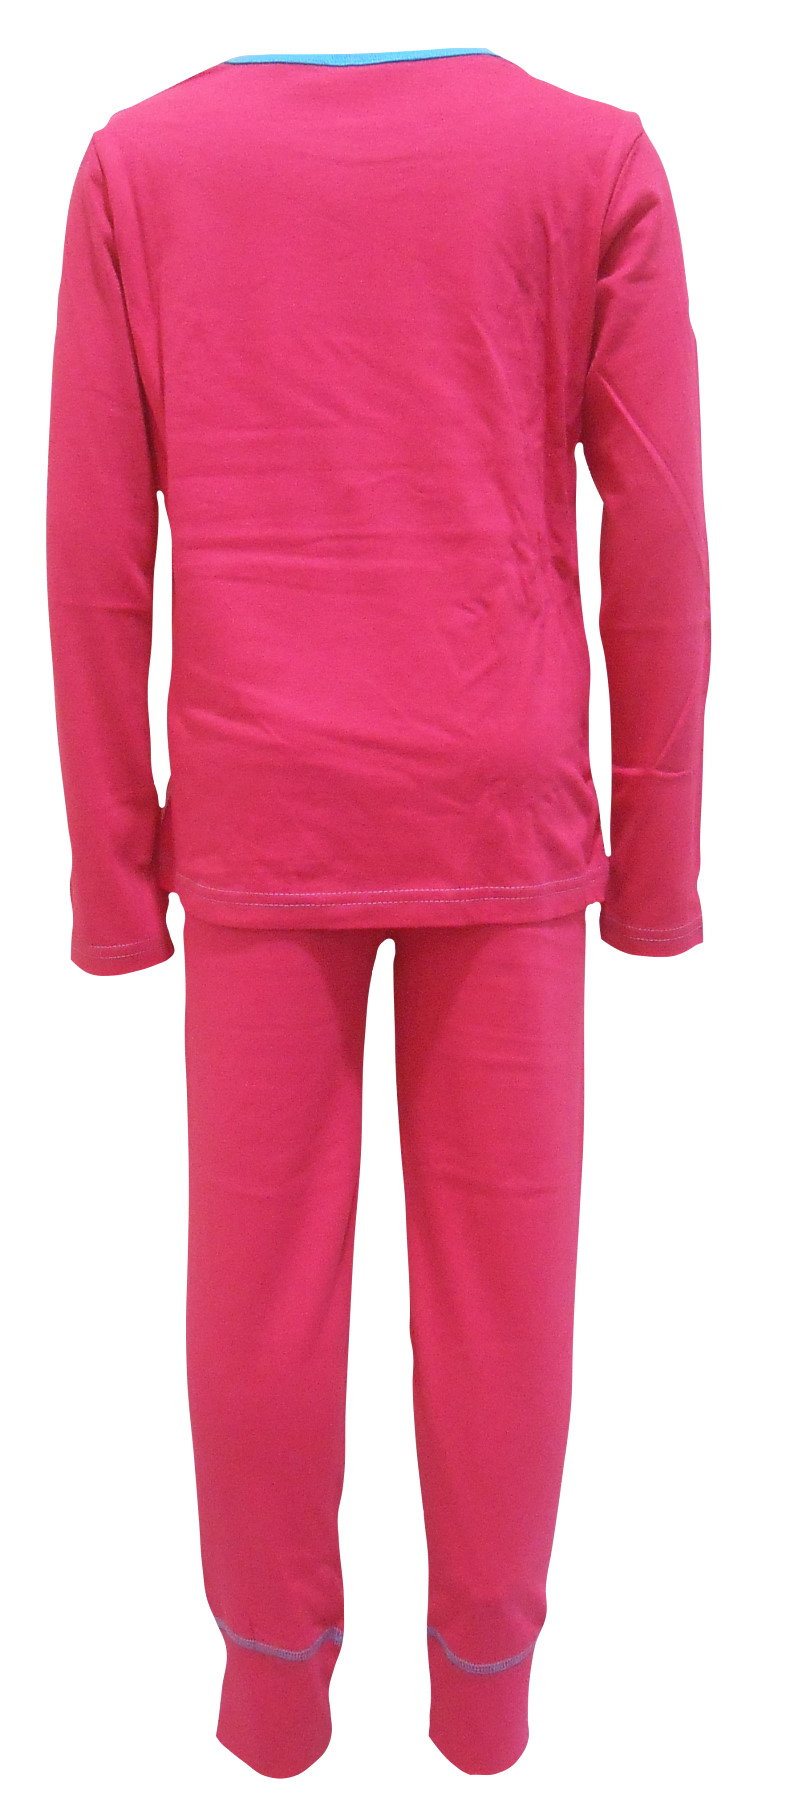 Shopkins Pyjamas PG233 (1).JPG  by Thingimijigs